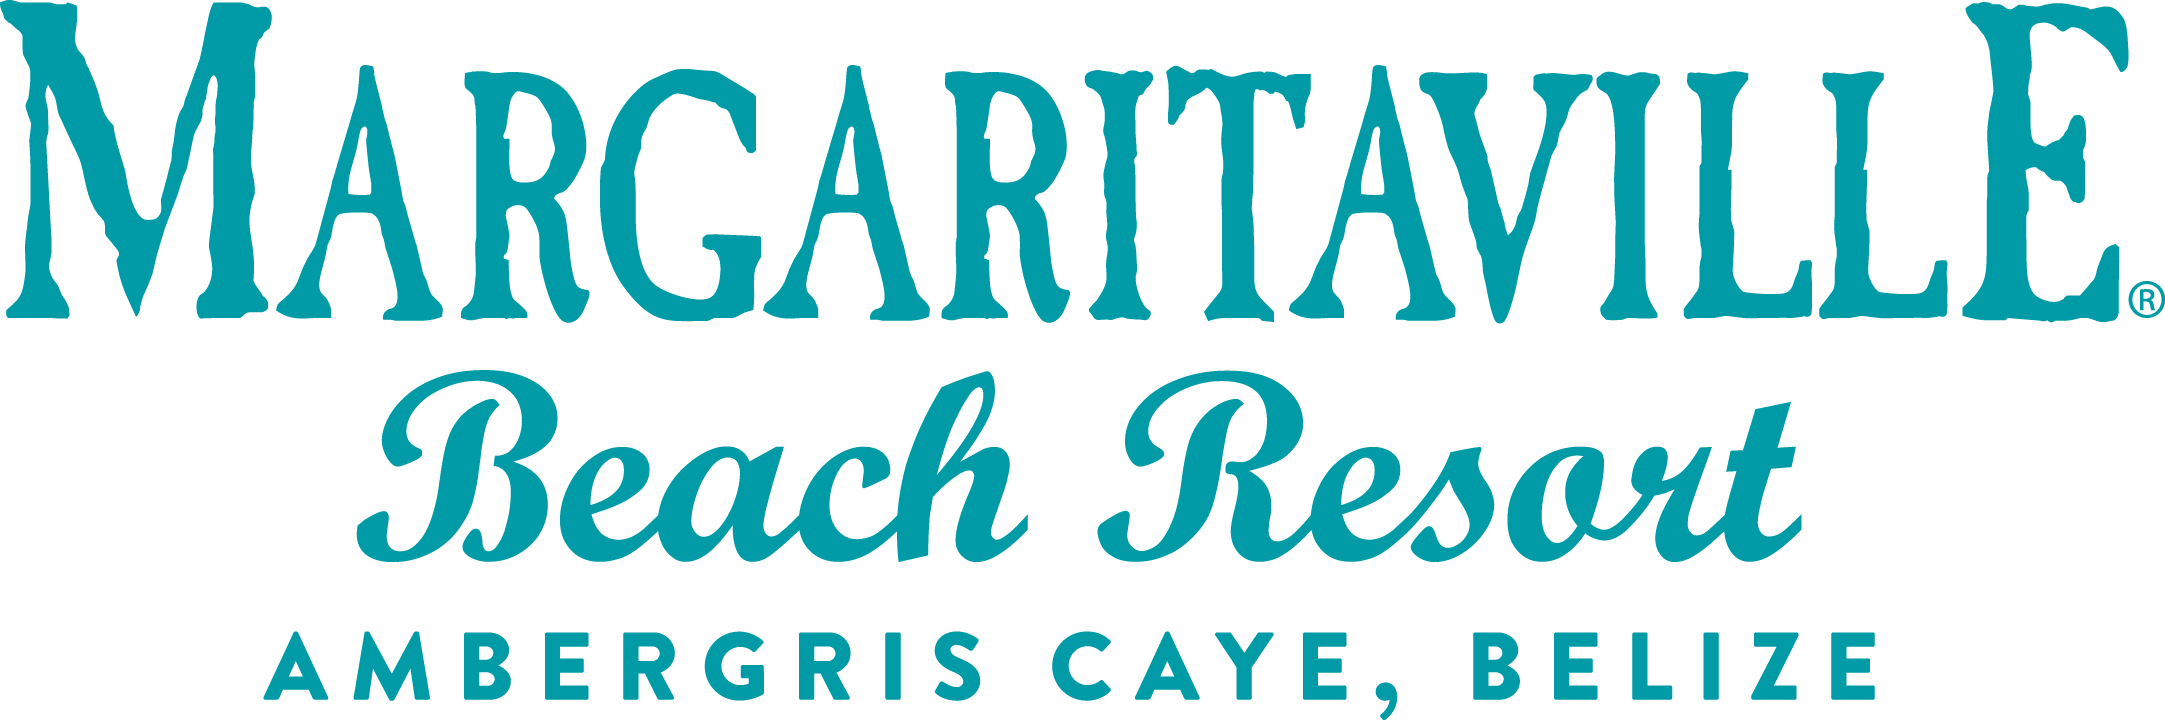 Margaritaville Beach Resort, Ambergris Caye, Belize Logo